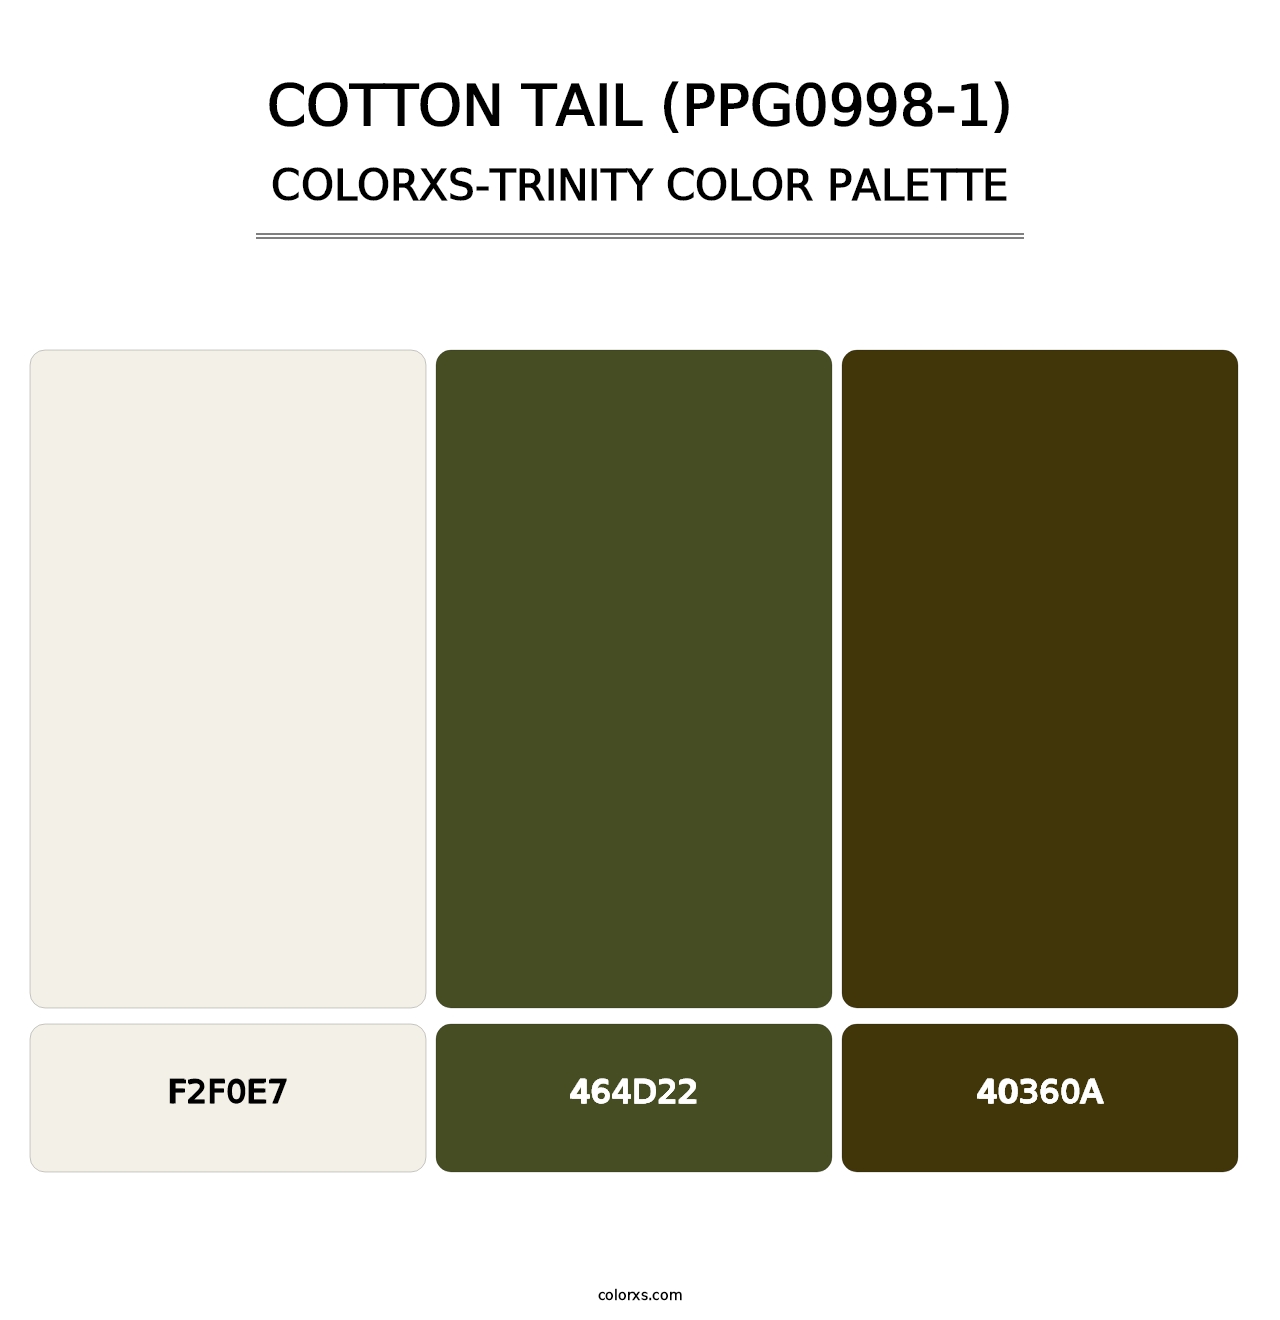 Cotton Tail (PPG0998-1) - Colorxs Trinity Palette